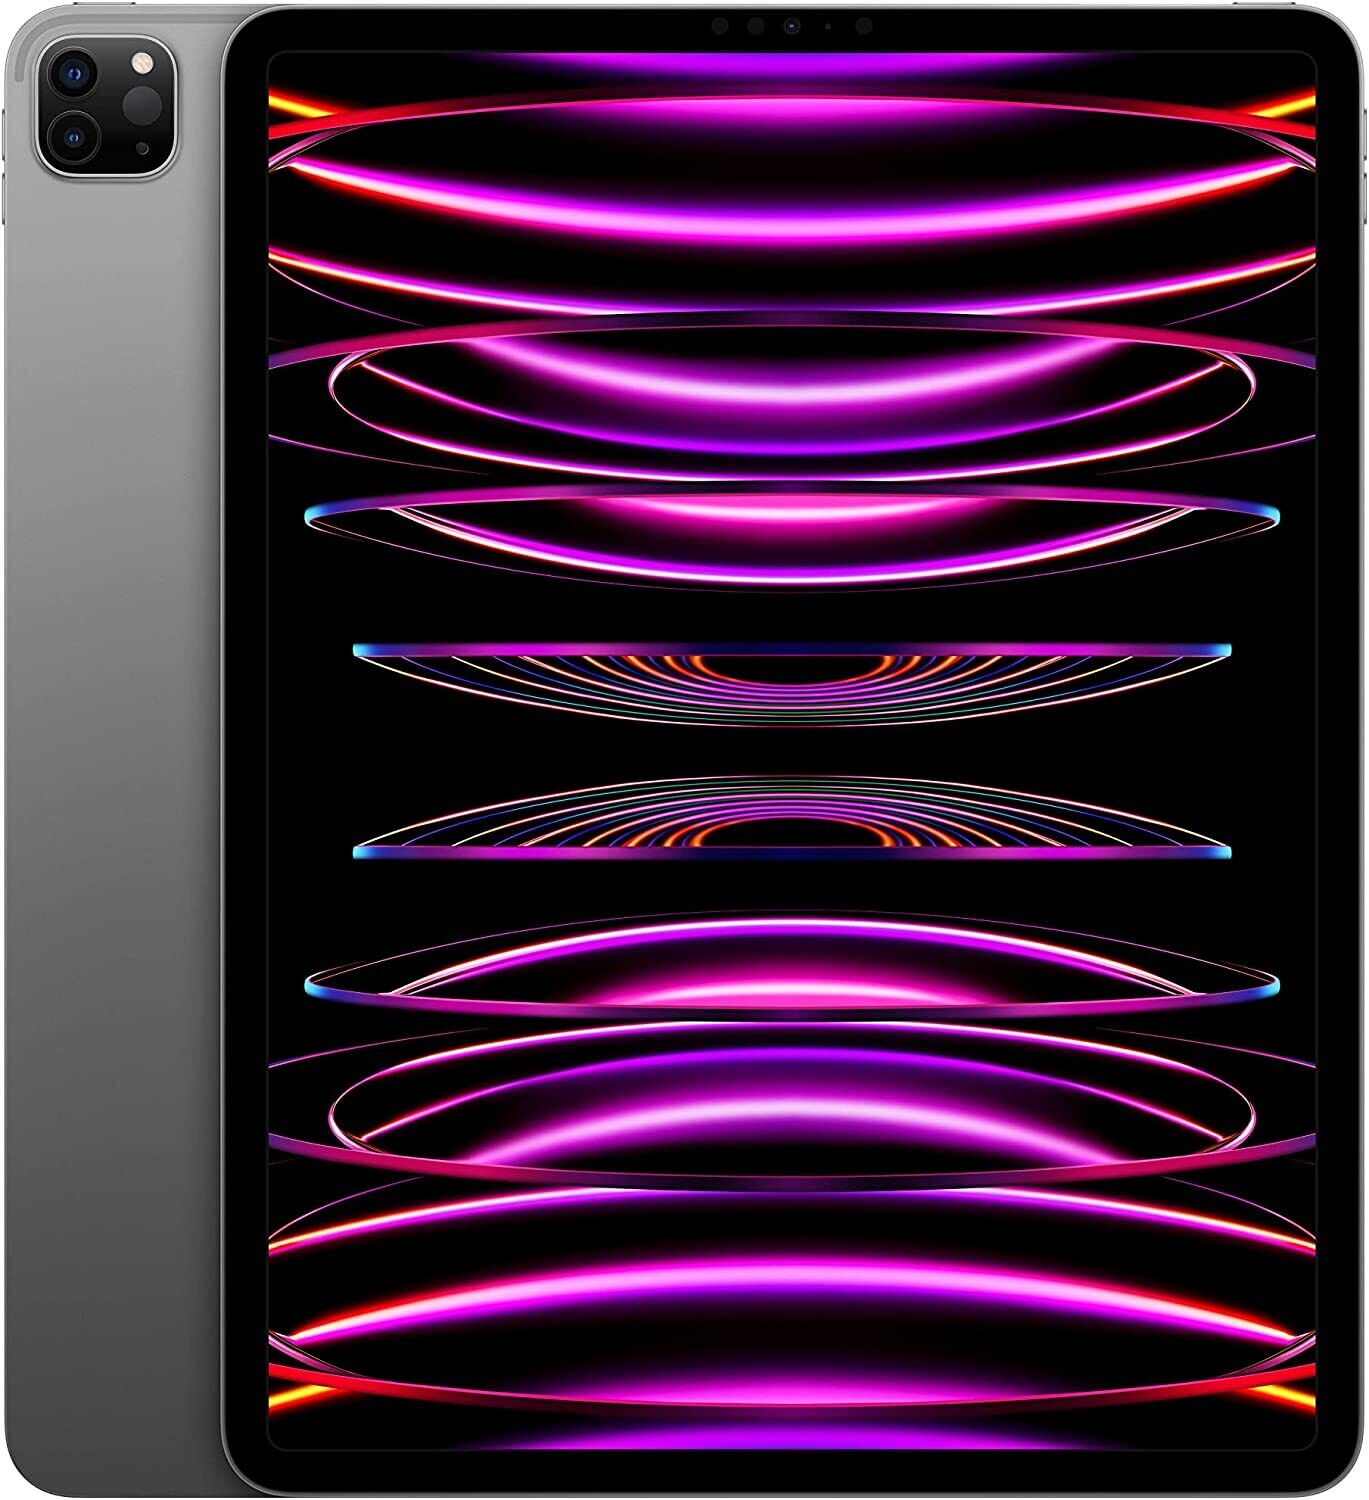 2022 Apple 12.9-inch iPad Pro (Wi-Fi + Cellular, 128GB) - Space Gray (6th Generation)